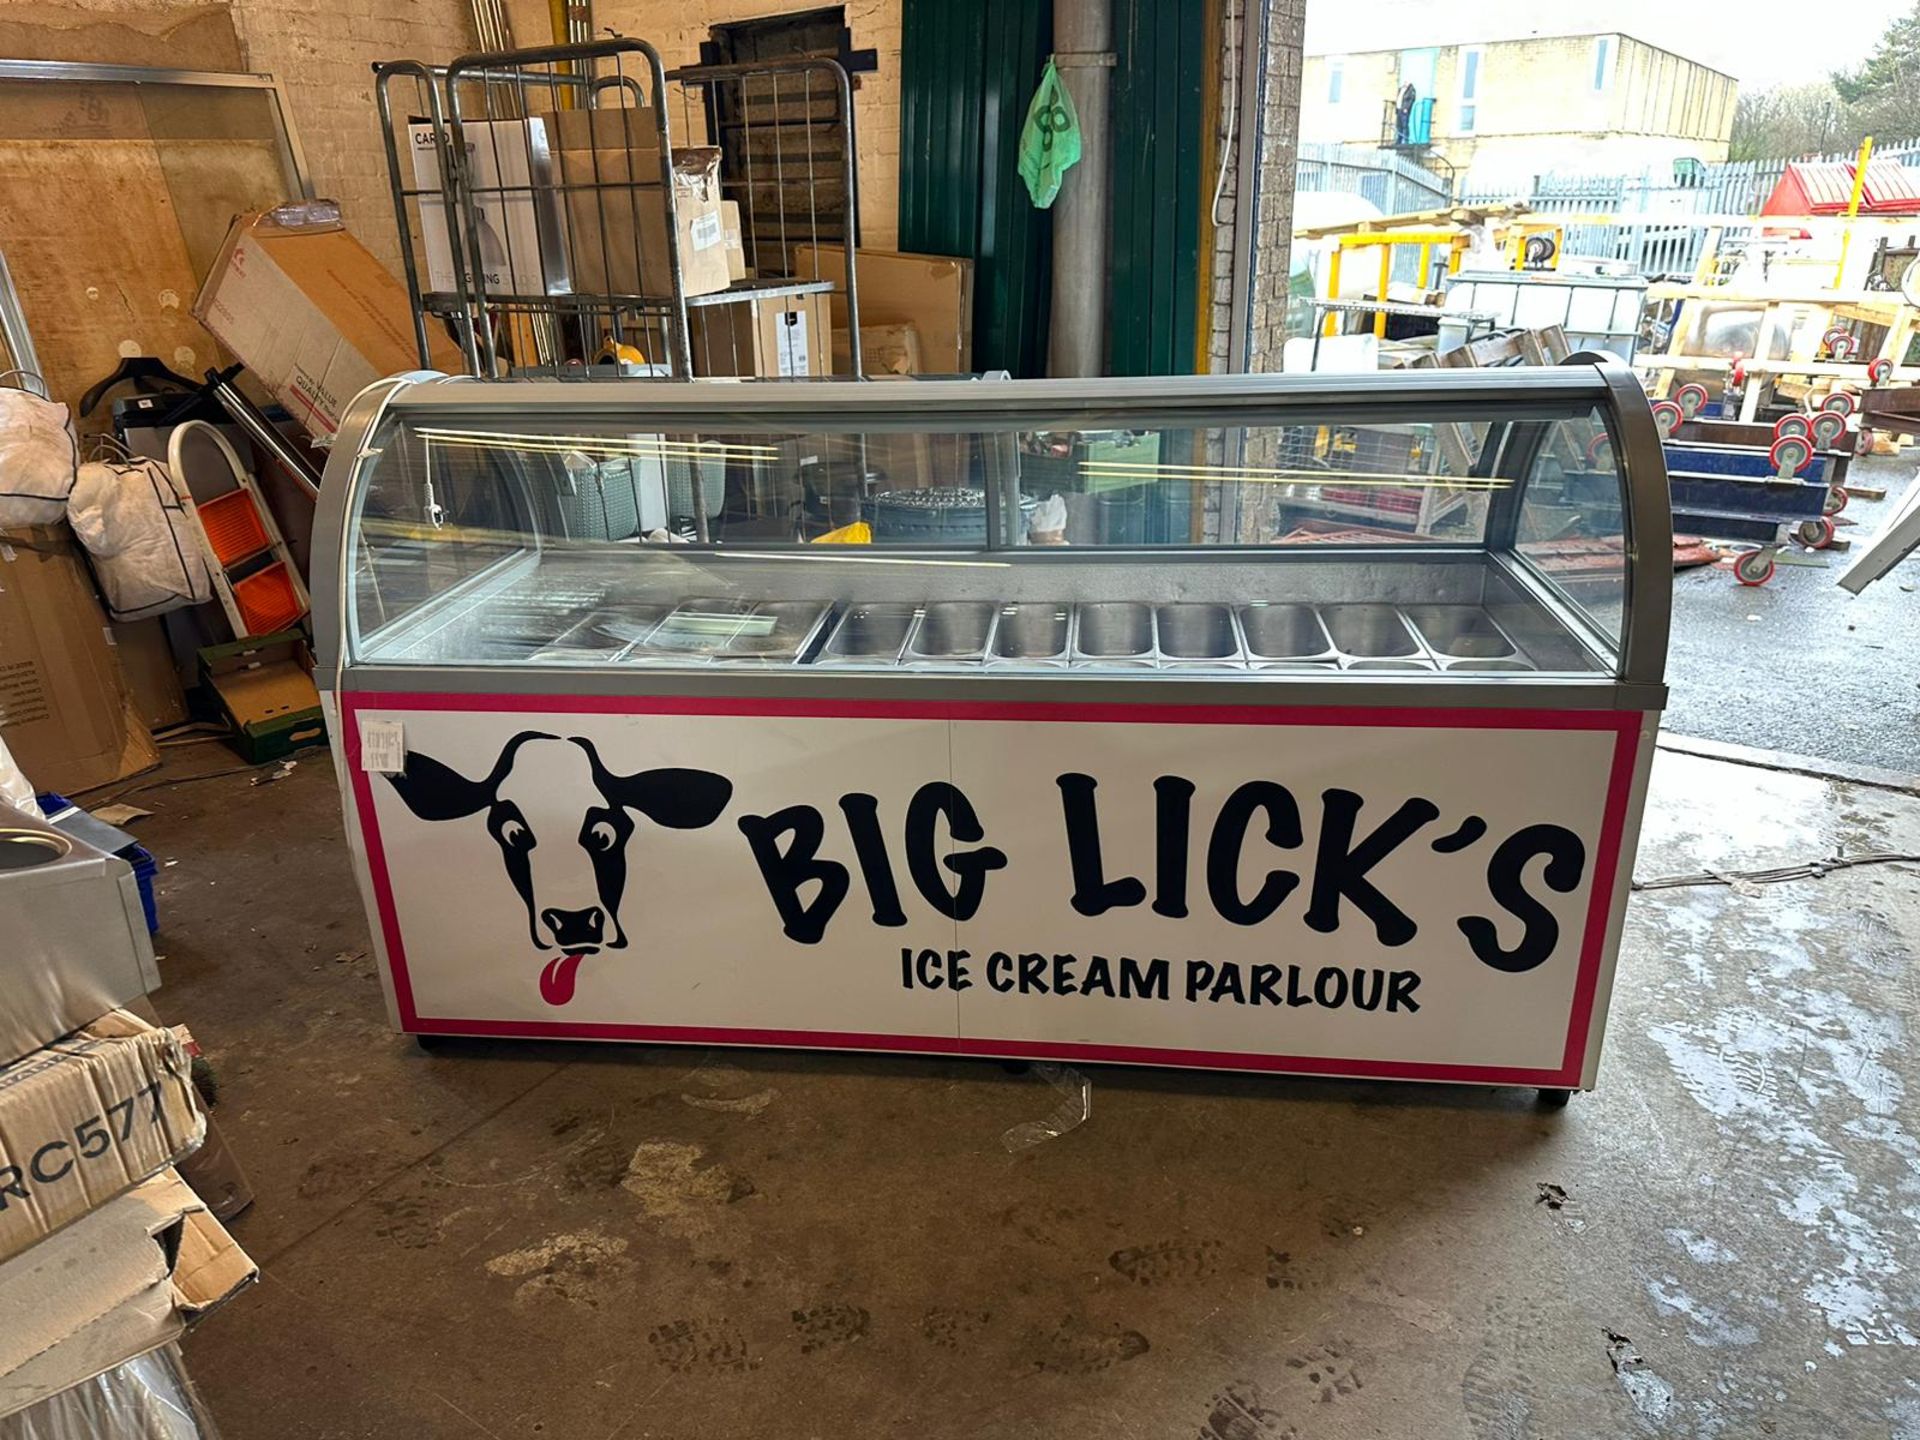 Big Licks Ice Cream Display Counter 2020, 2100 x 850 - Image 2 of 4